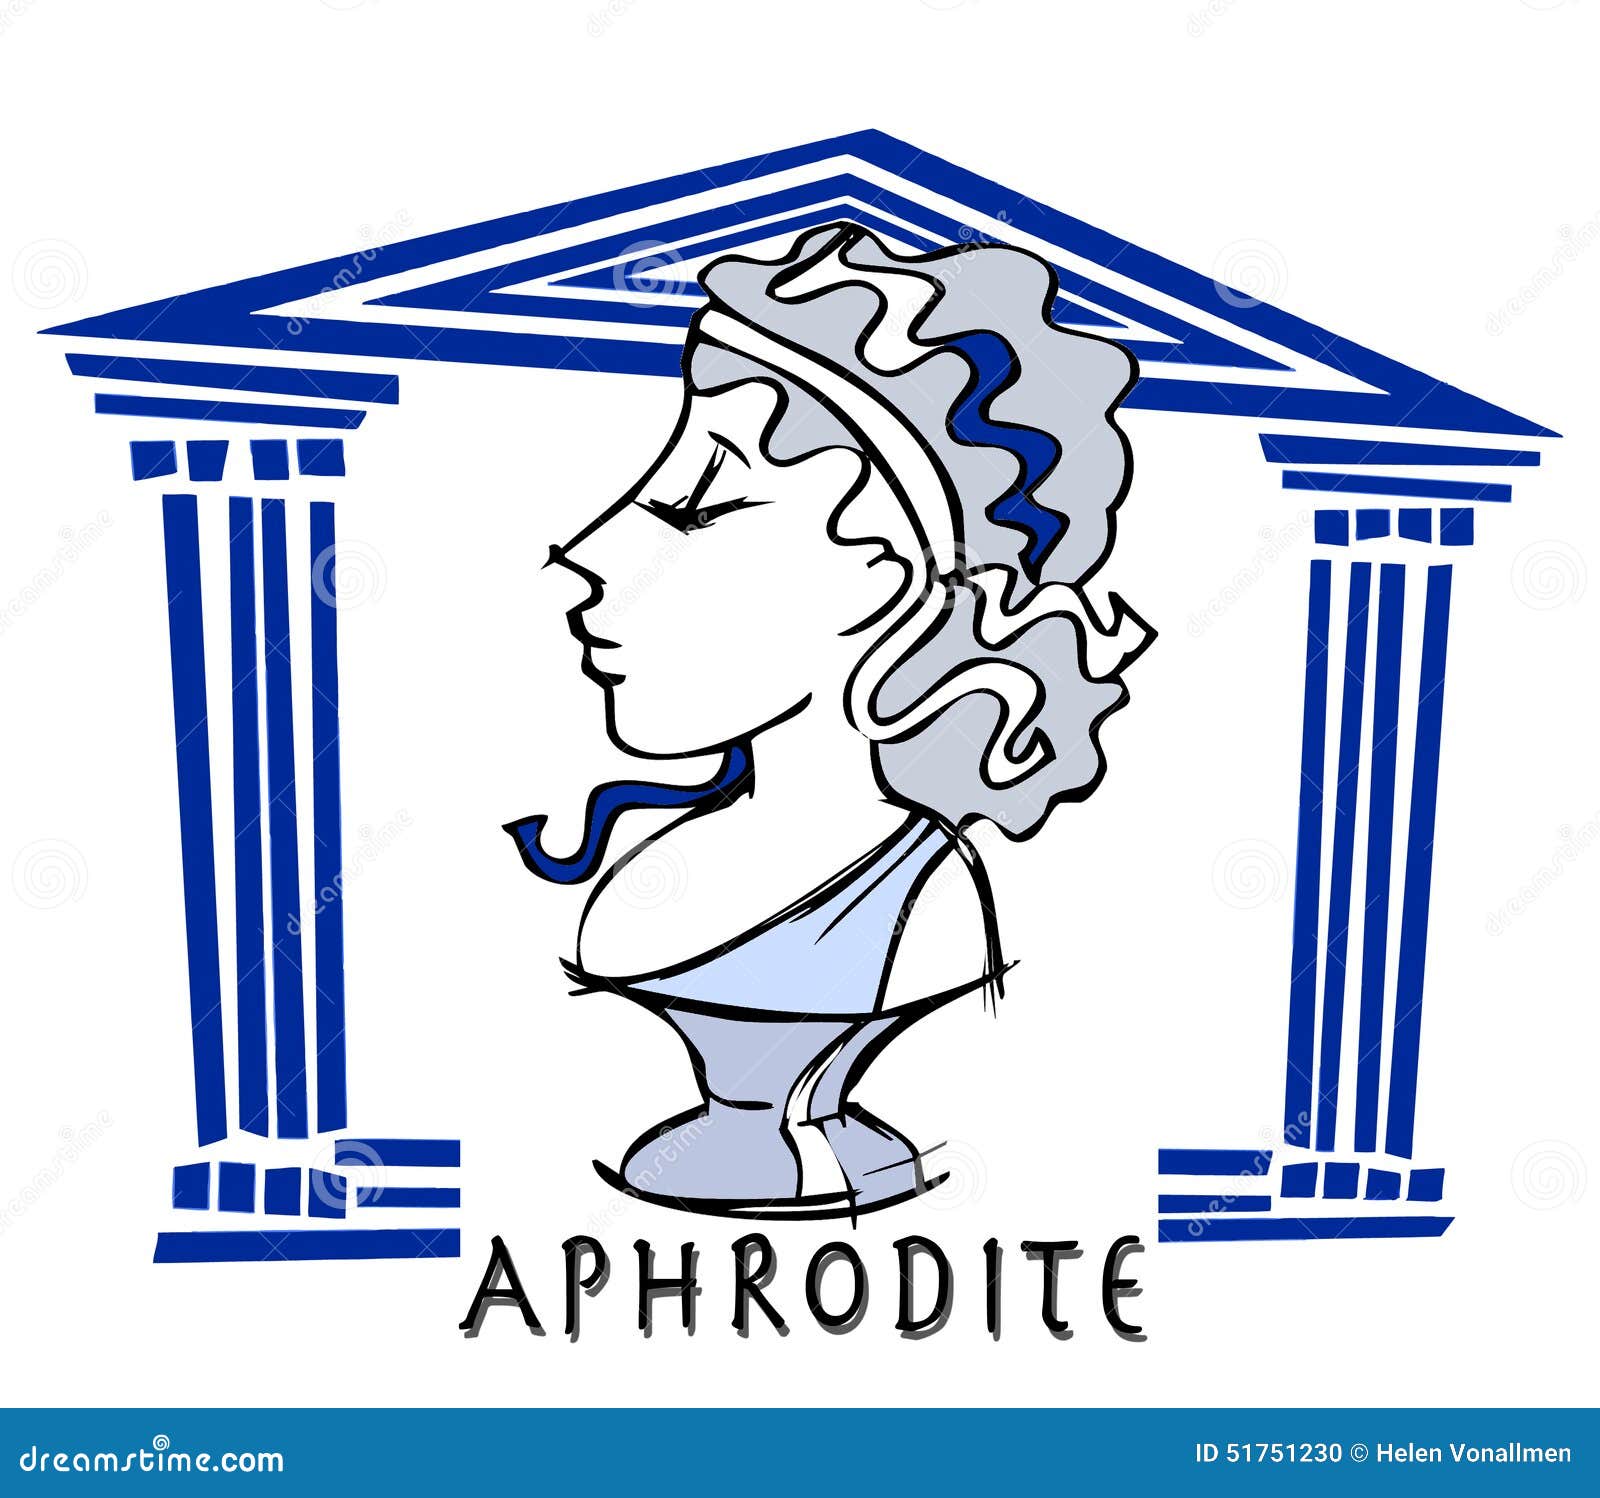 aphrodite, venus, greek goddess cartoon